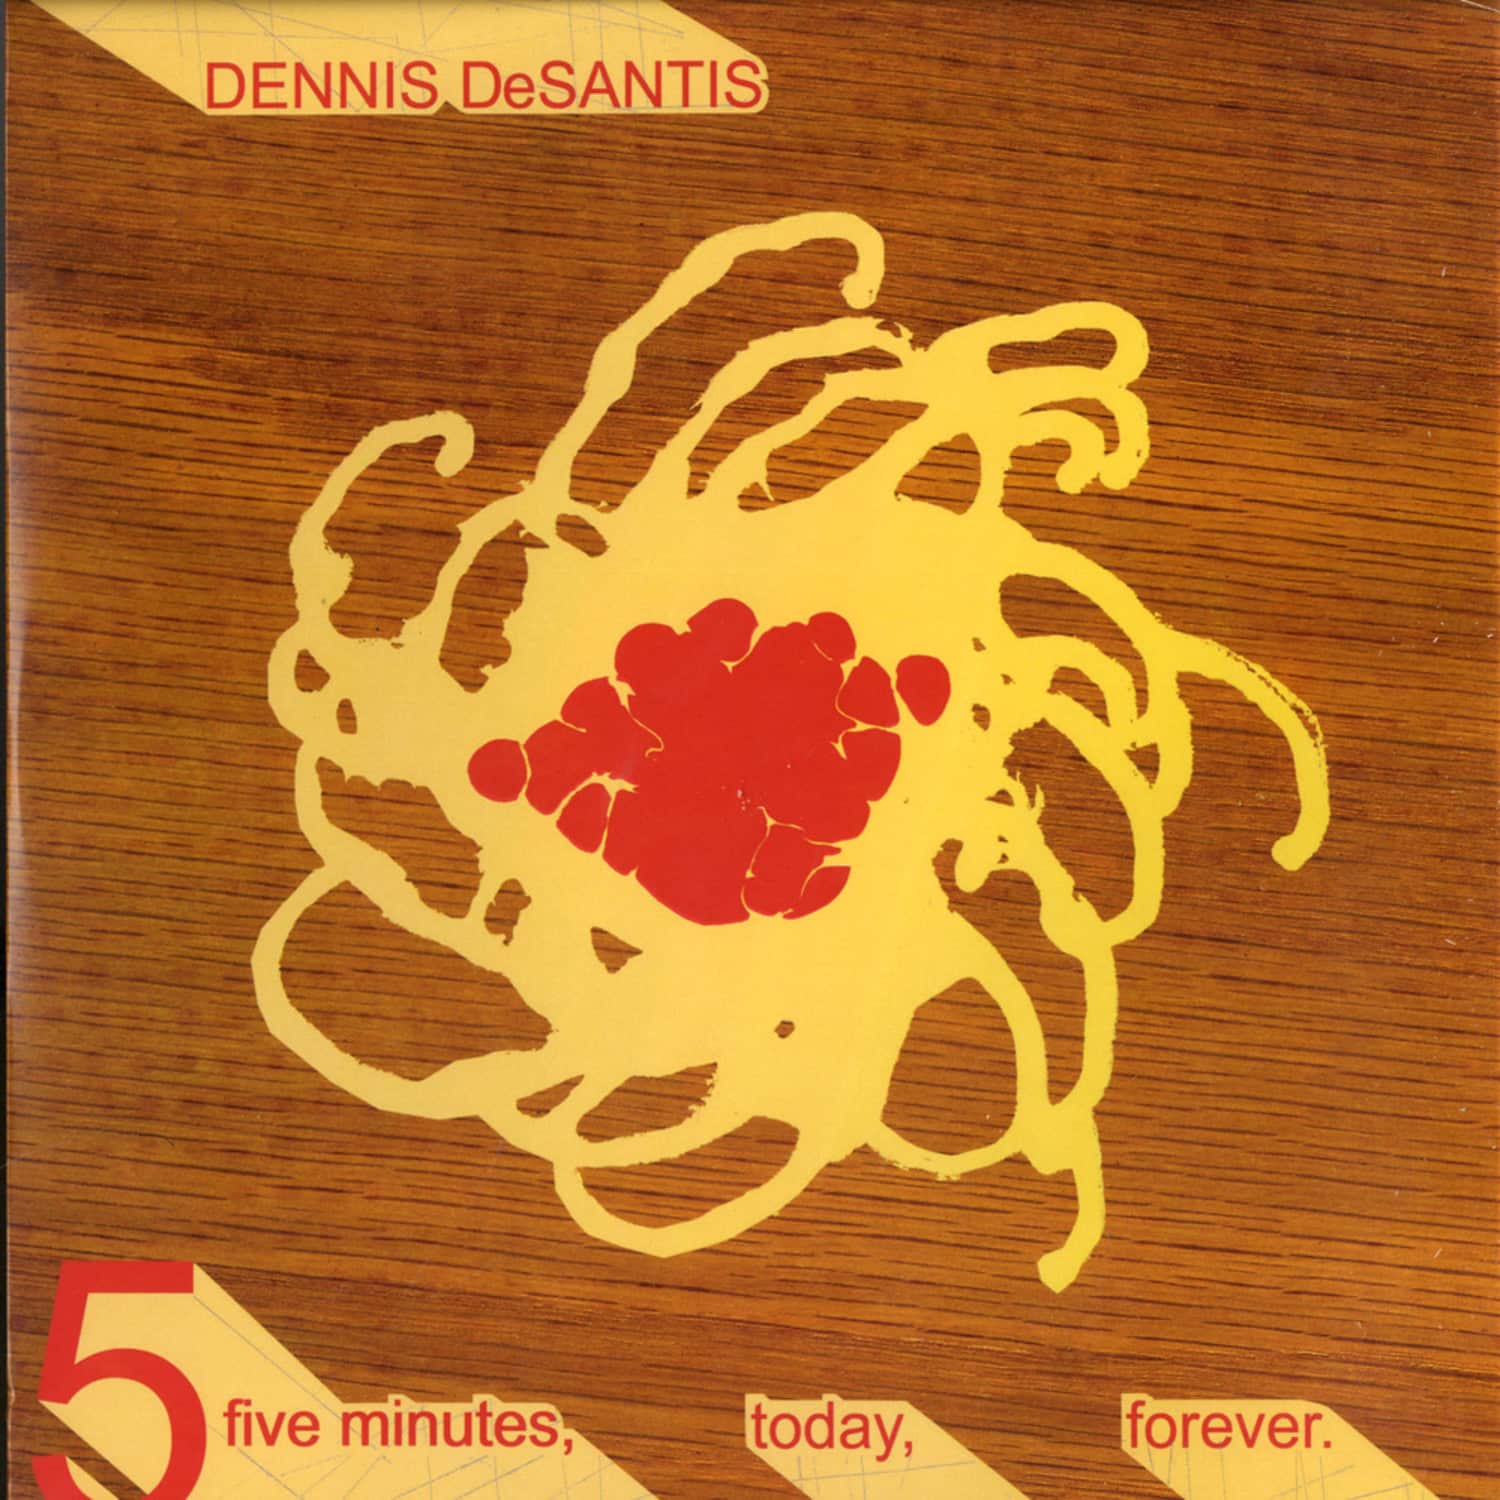 Dennis DeSantis - 5 MINUTES, TODAY, FOREVER